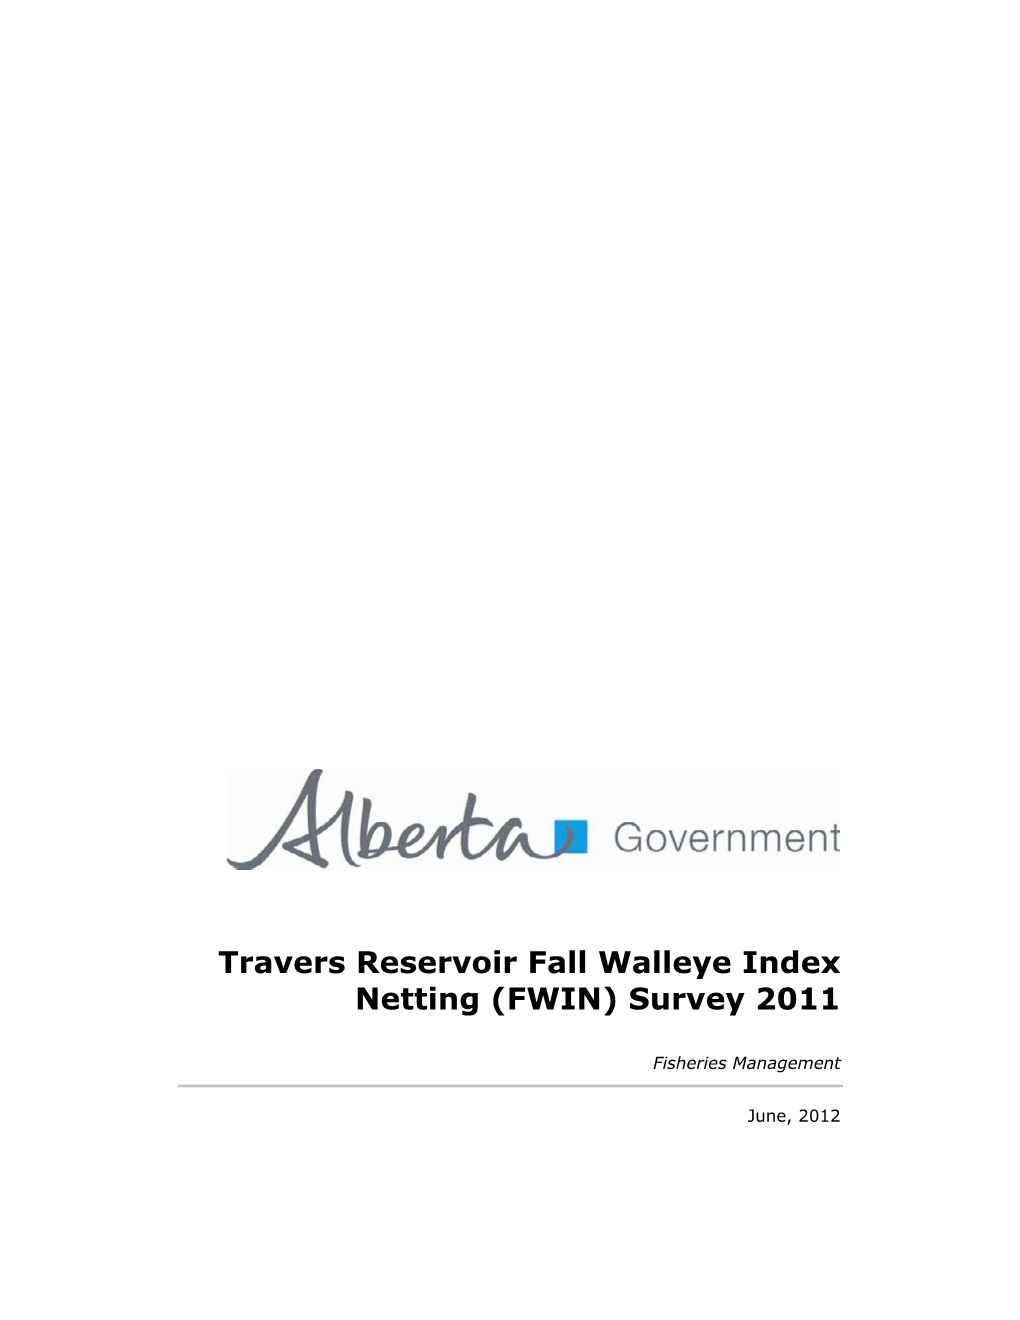 Travers Reservoir Fall Walleye Index Netting 2011